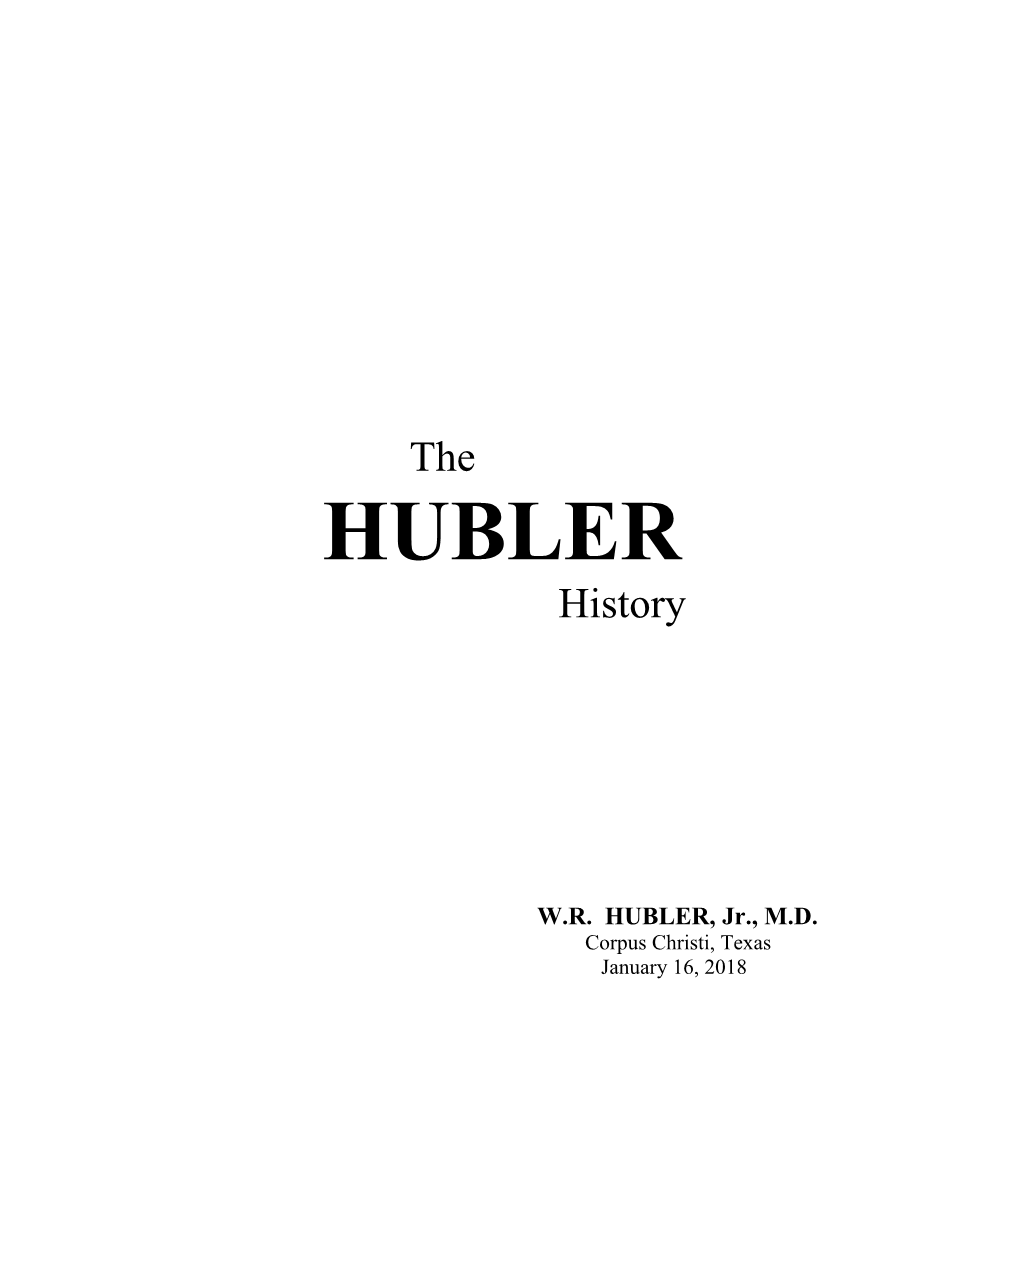 The Hubler History